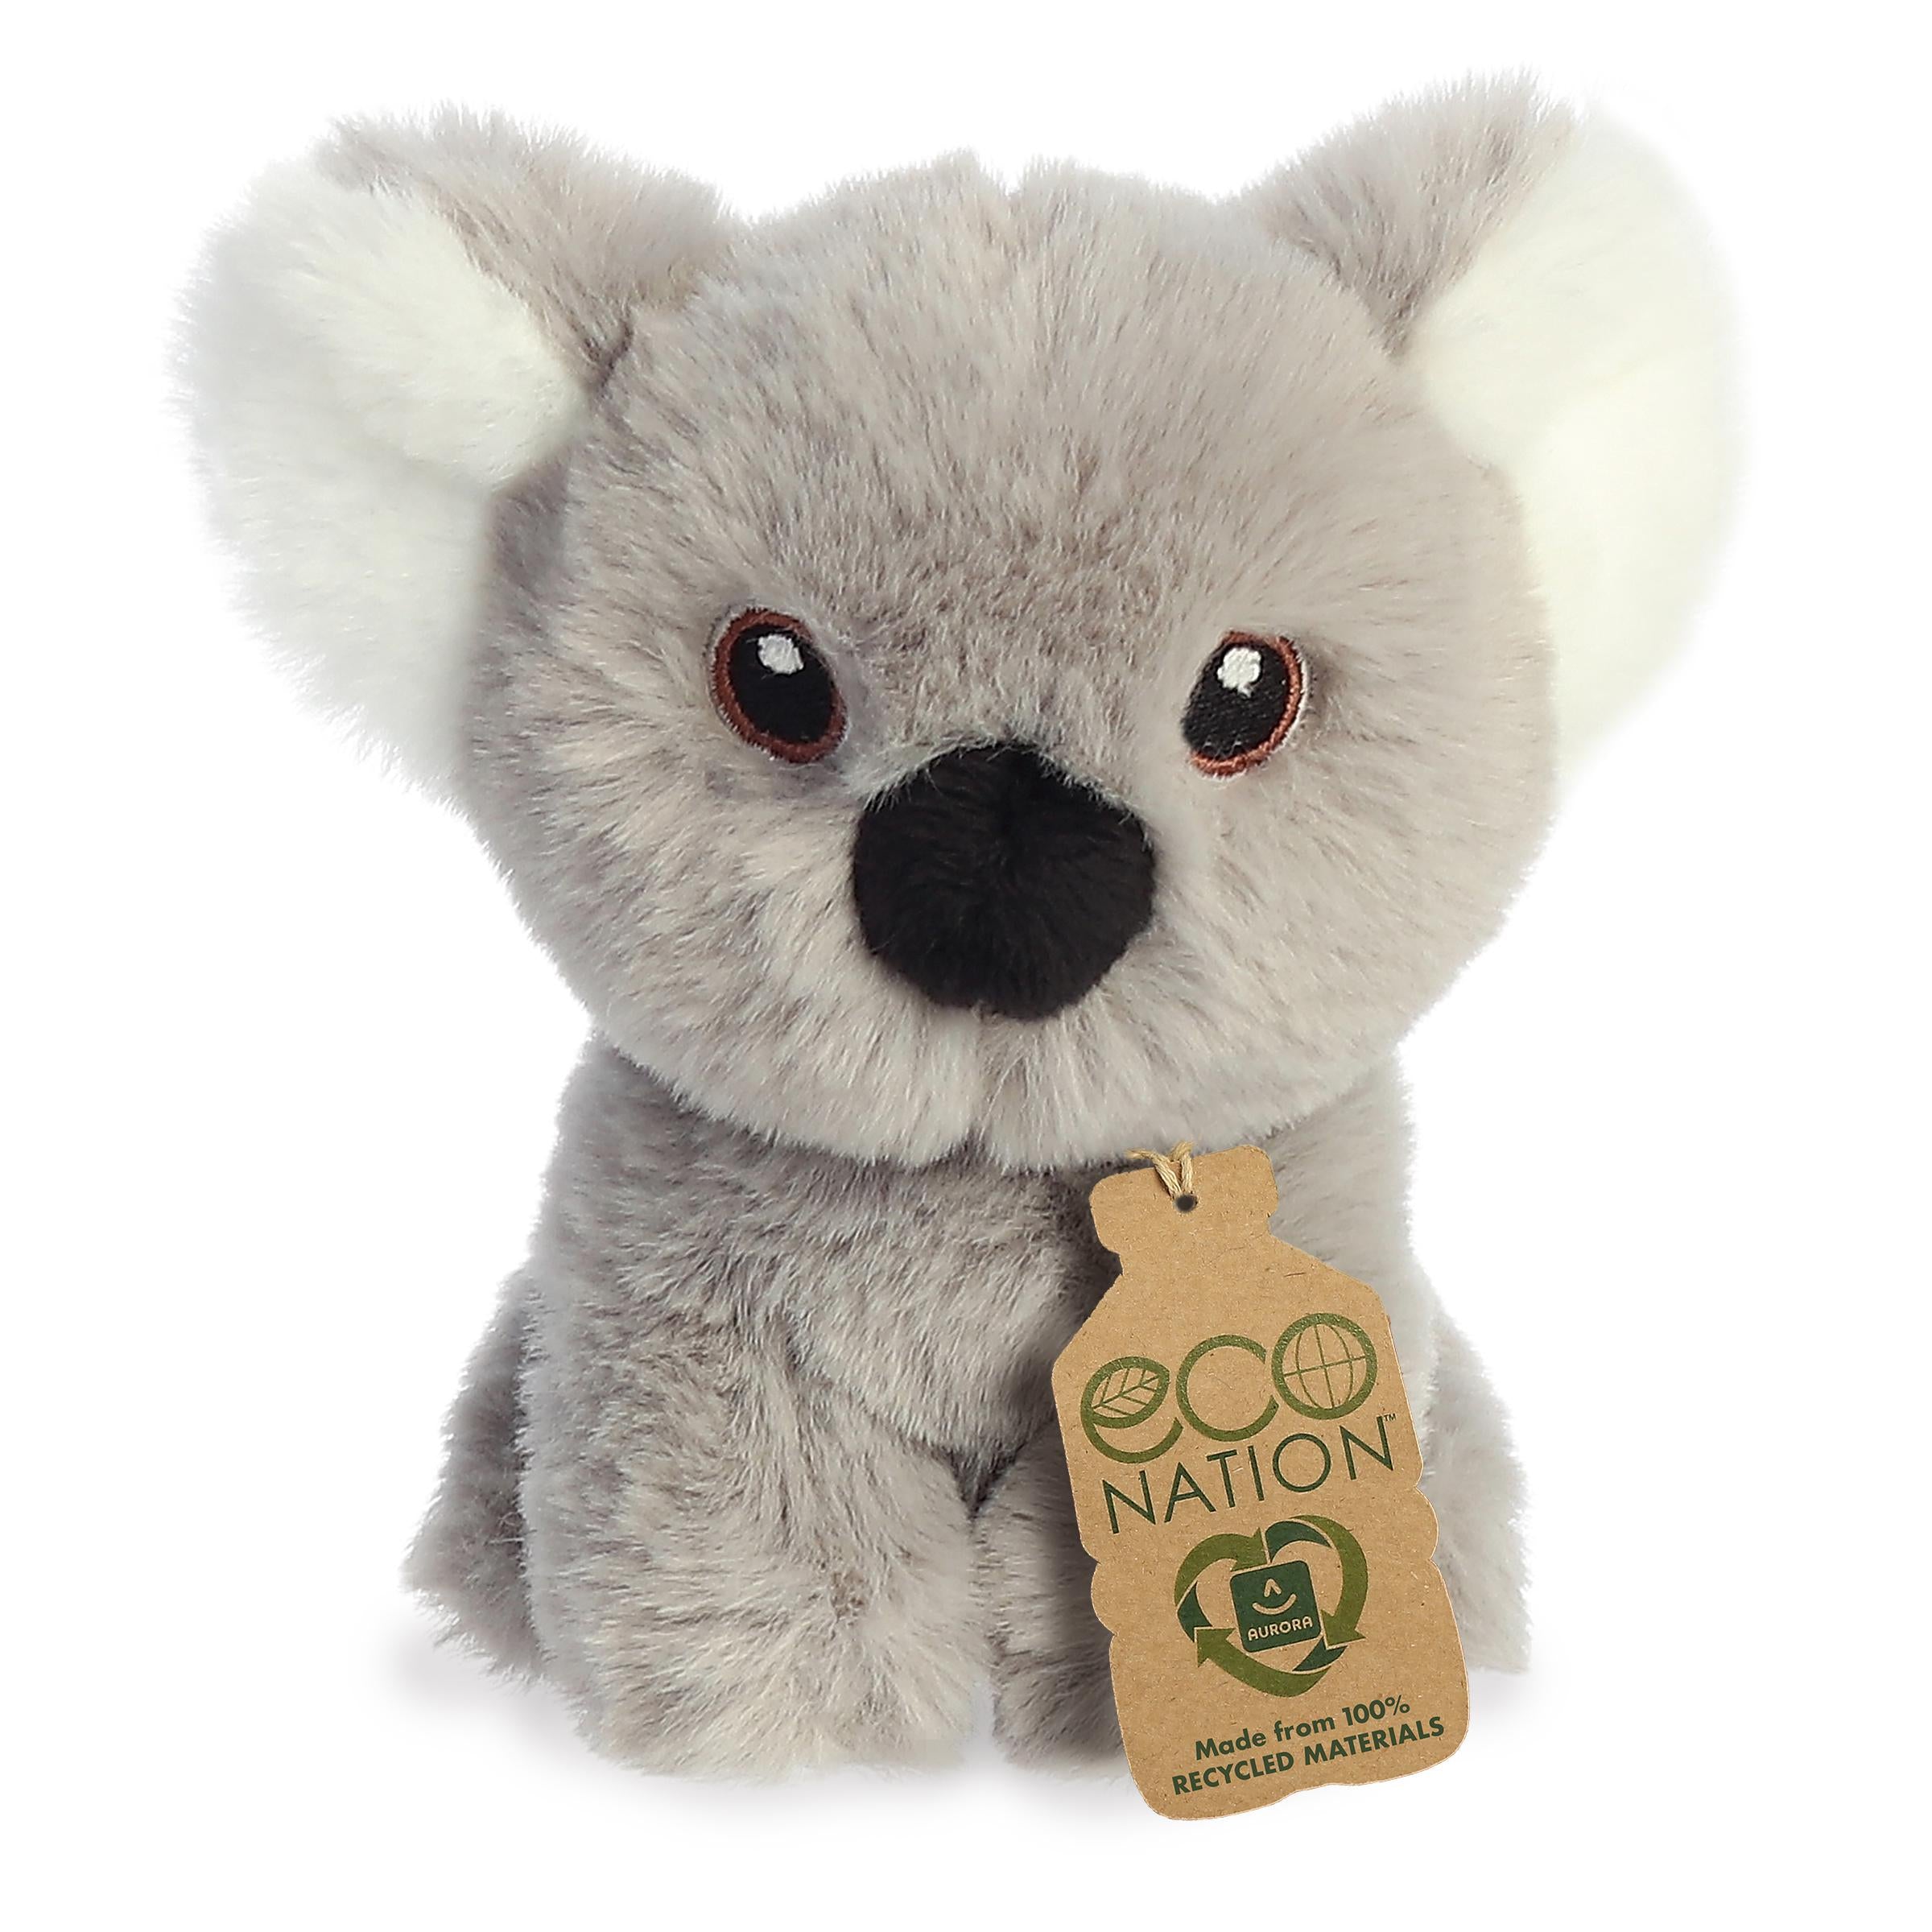 Mini Koala Ã¢â‚¬â€œ Adorable Eco-Nation Stuffed Animals Ã¢â‚¬â€œ Aurora